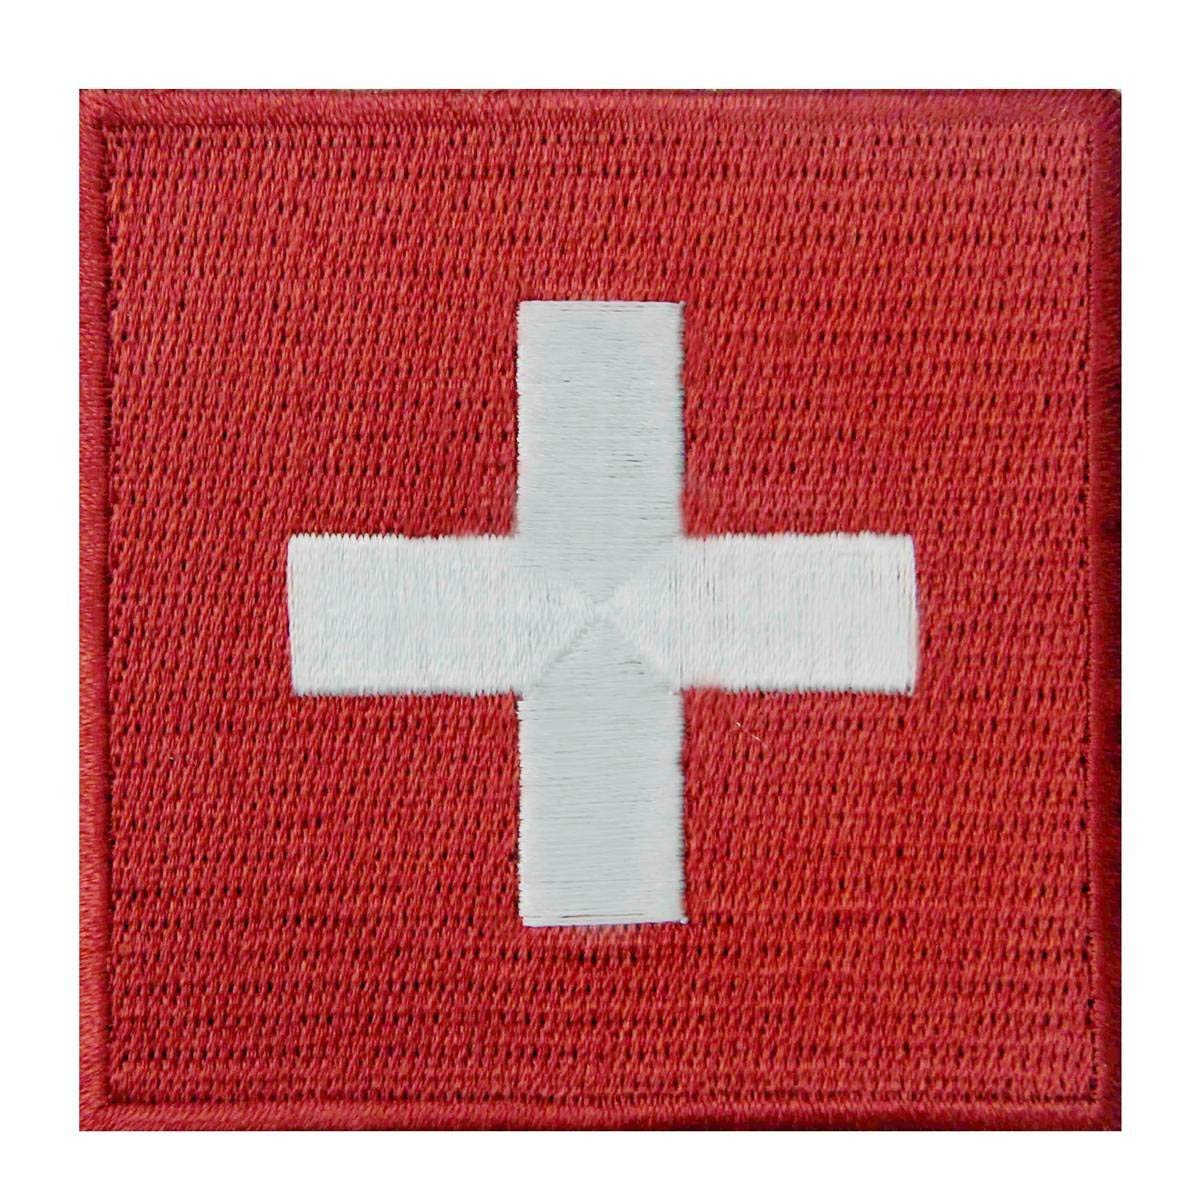 Swiss Flag Logo - Amazon.com: Switzerland Flag Embroidered CH Patch Swiss Iron On Sew ...